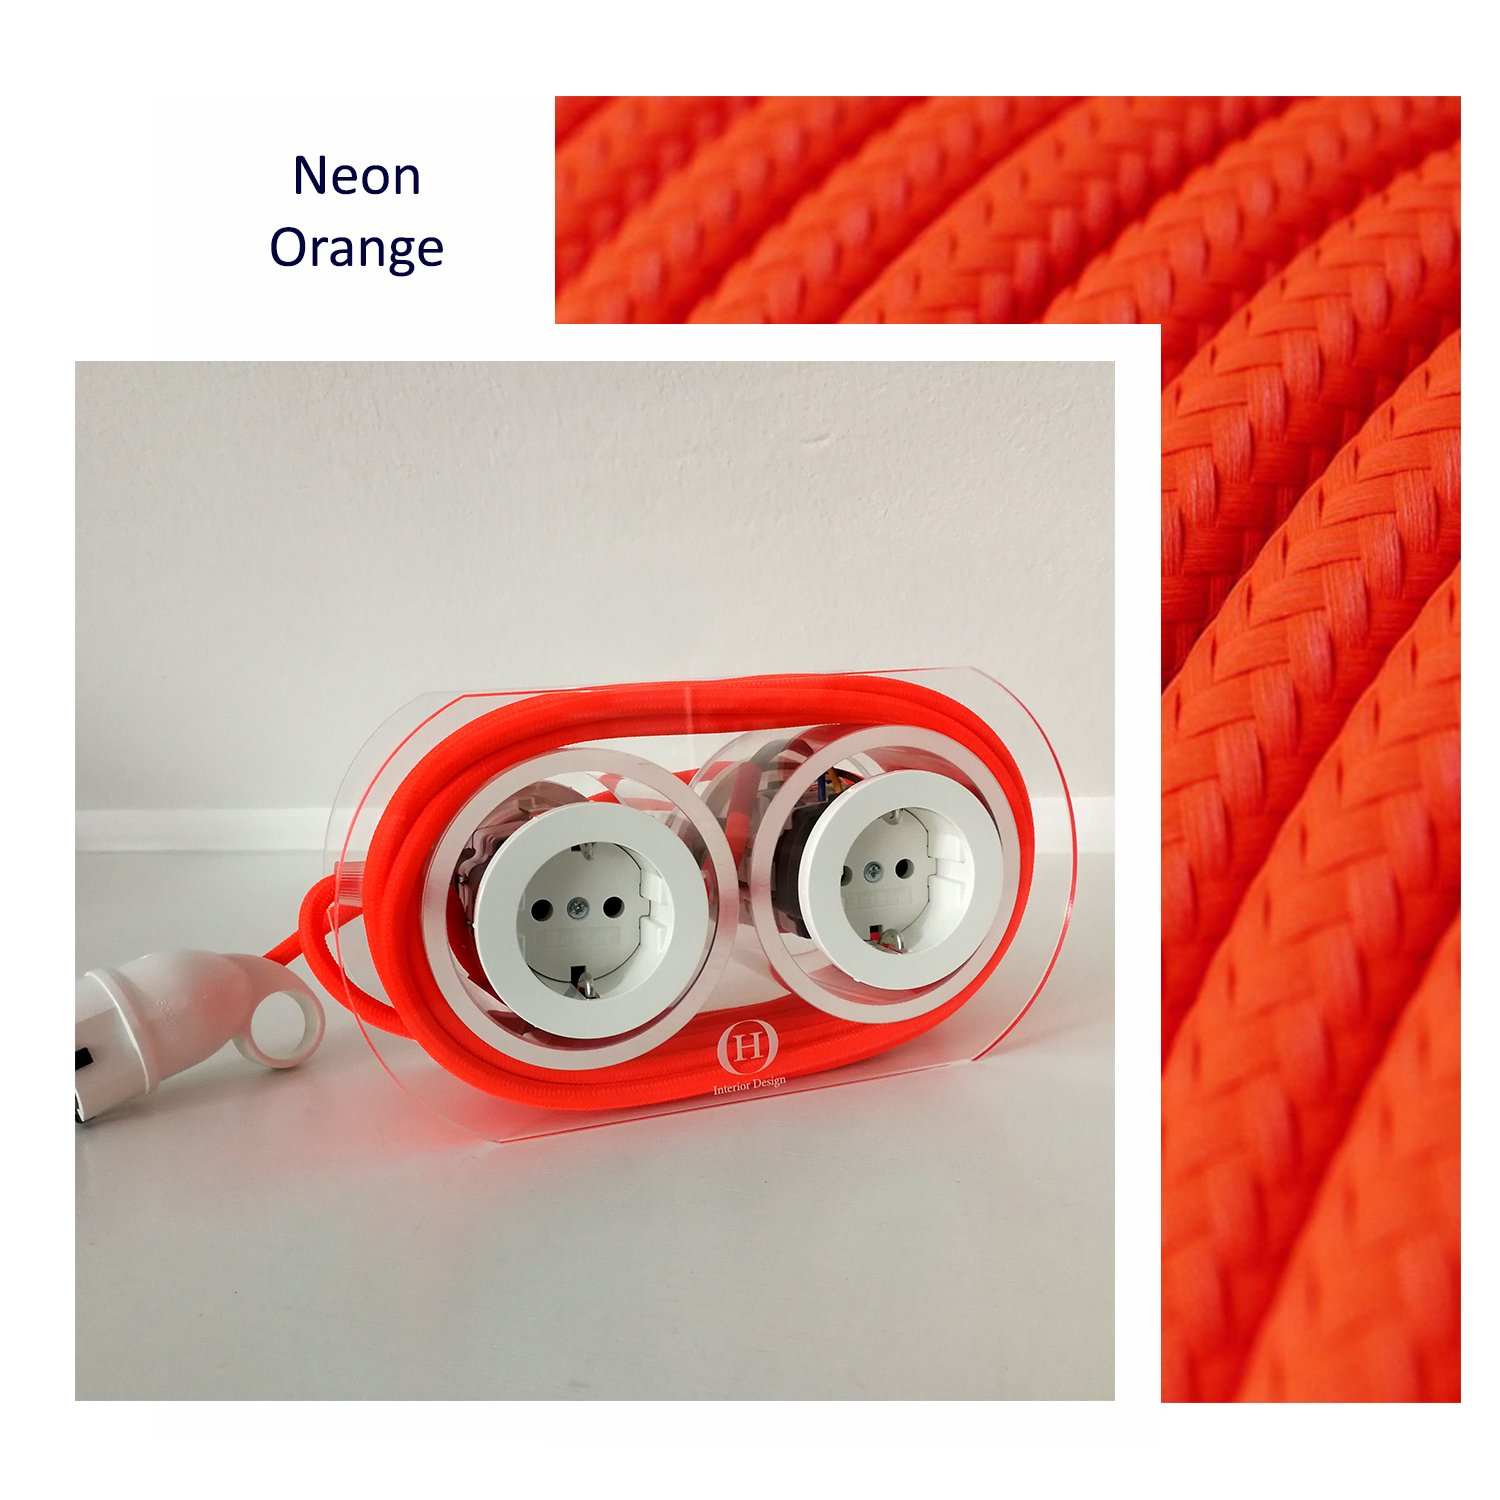 Extension Cord for 4 Plugs_Neon Orange_white plug.jpg